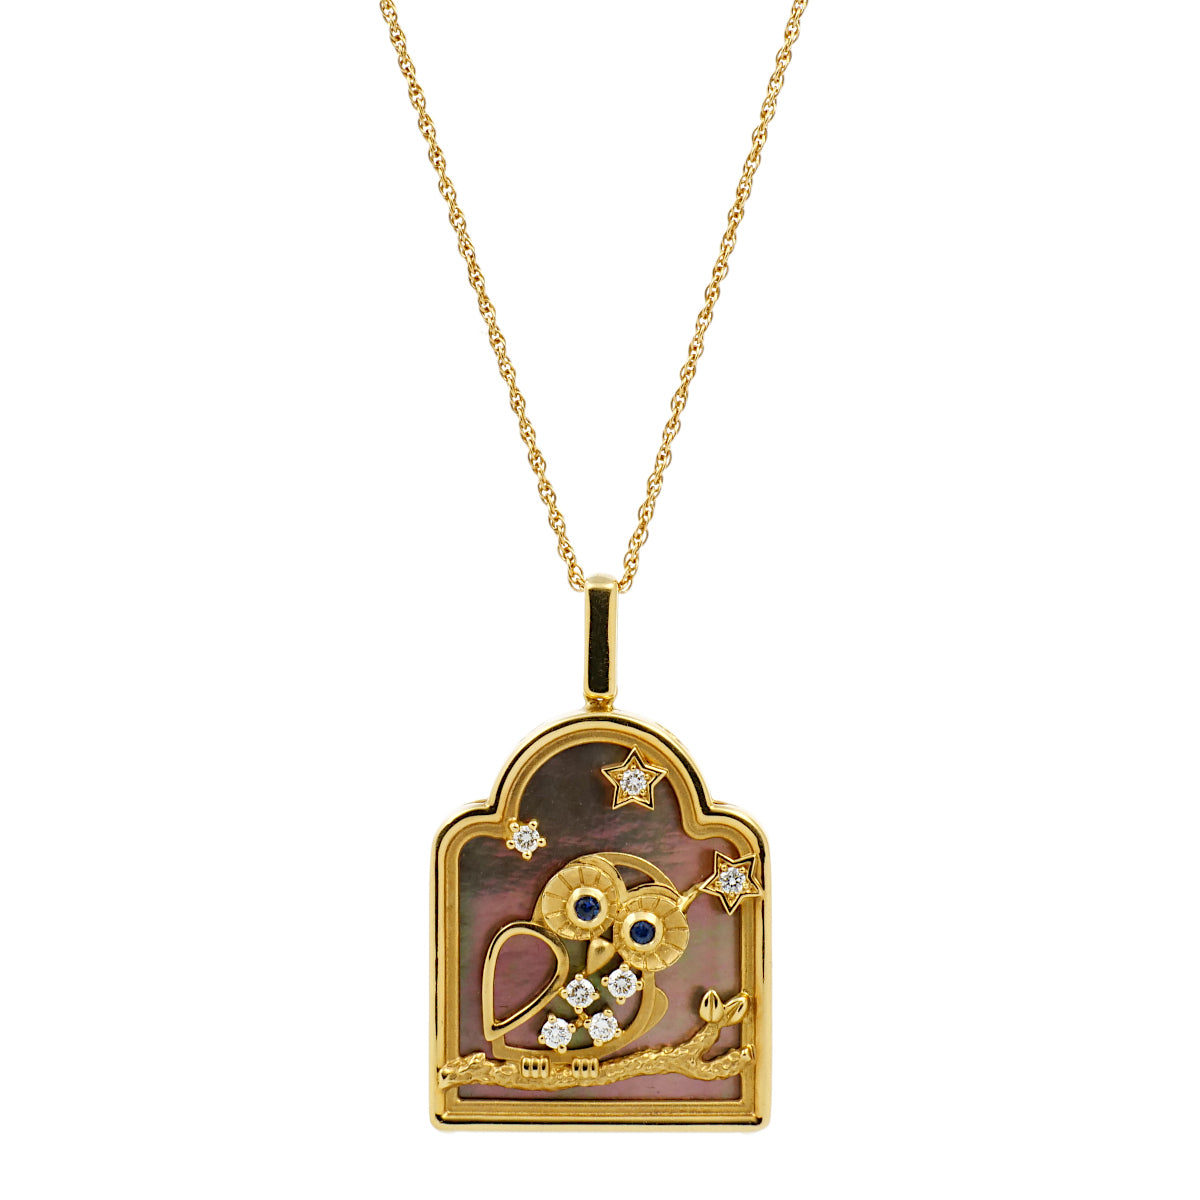 CarrerayCarrera Goddess Motif Necklace with Diamond in 18K Yellow Gold for Women